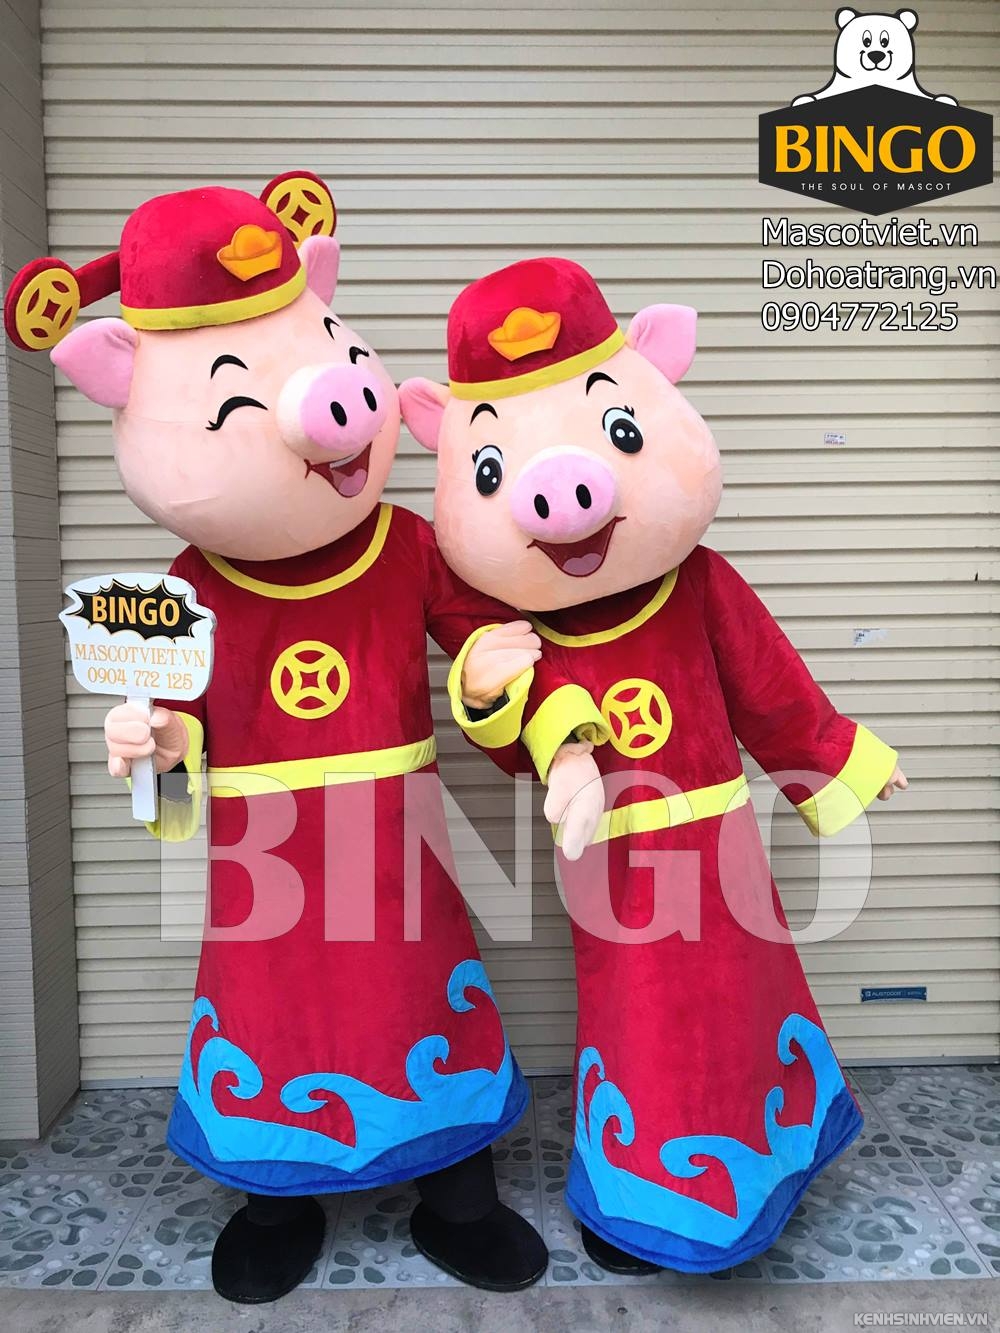 mascot-con-heo-than-tai-bingo-costumes-0904772125-2-.jpg